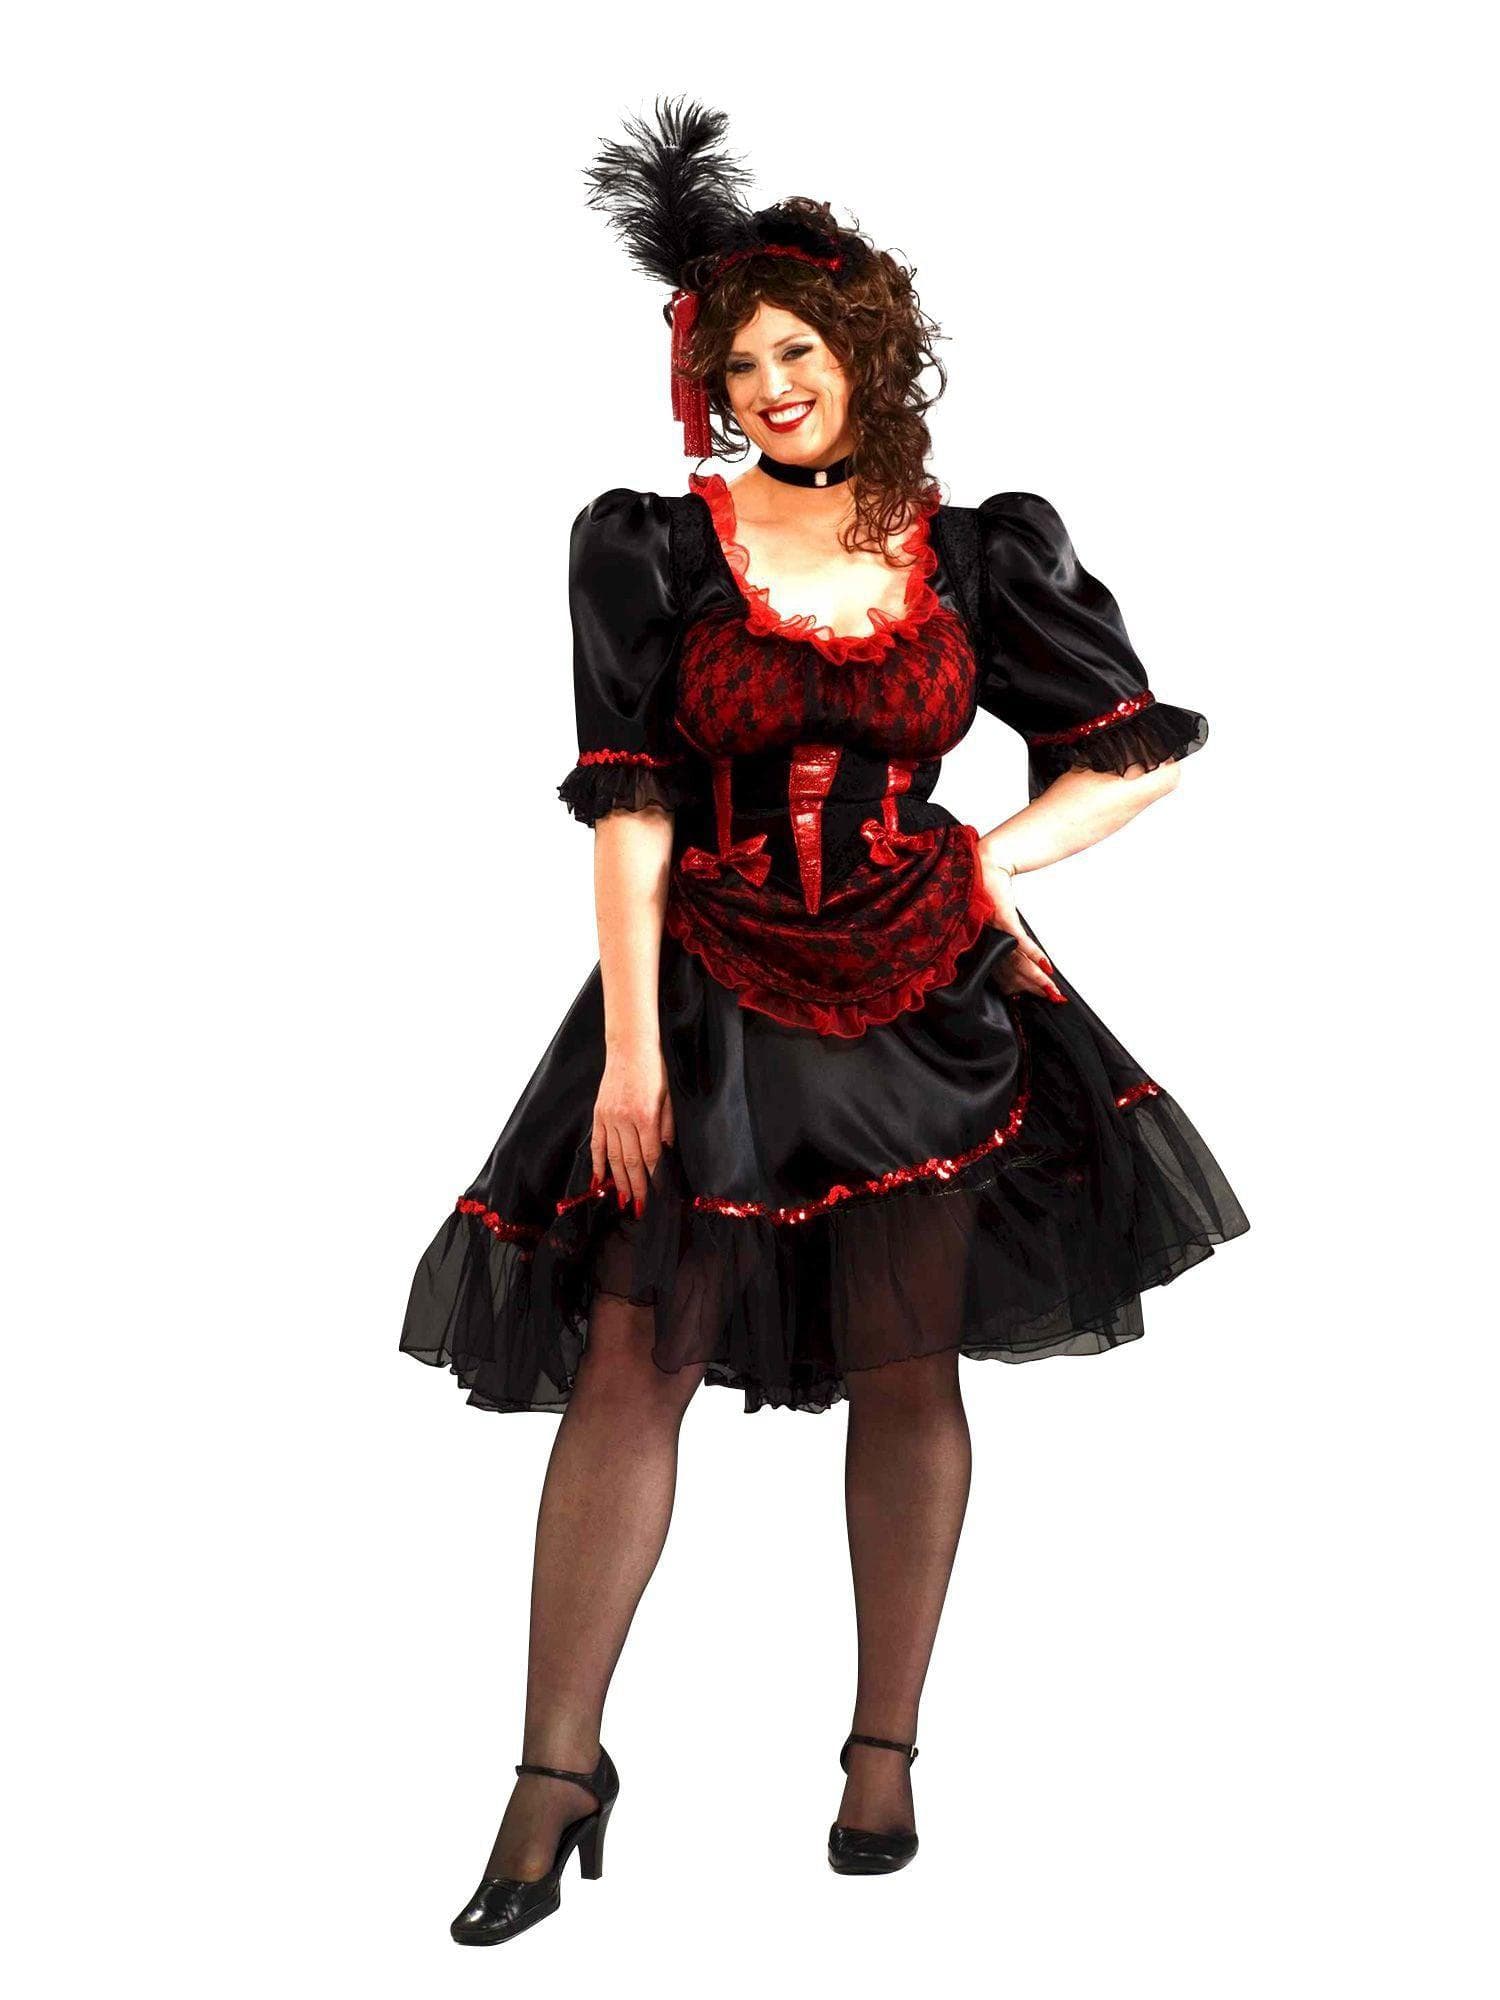 Women's Plus Size Wild West Saloon Girl Costume - costumes.com